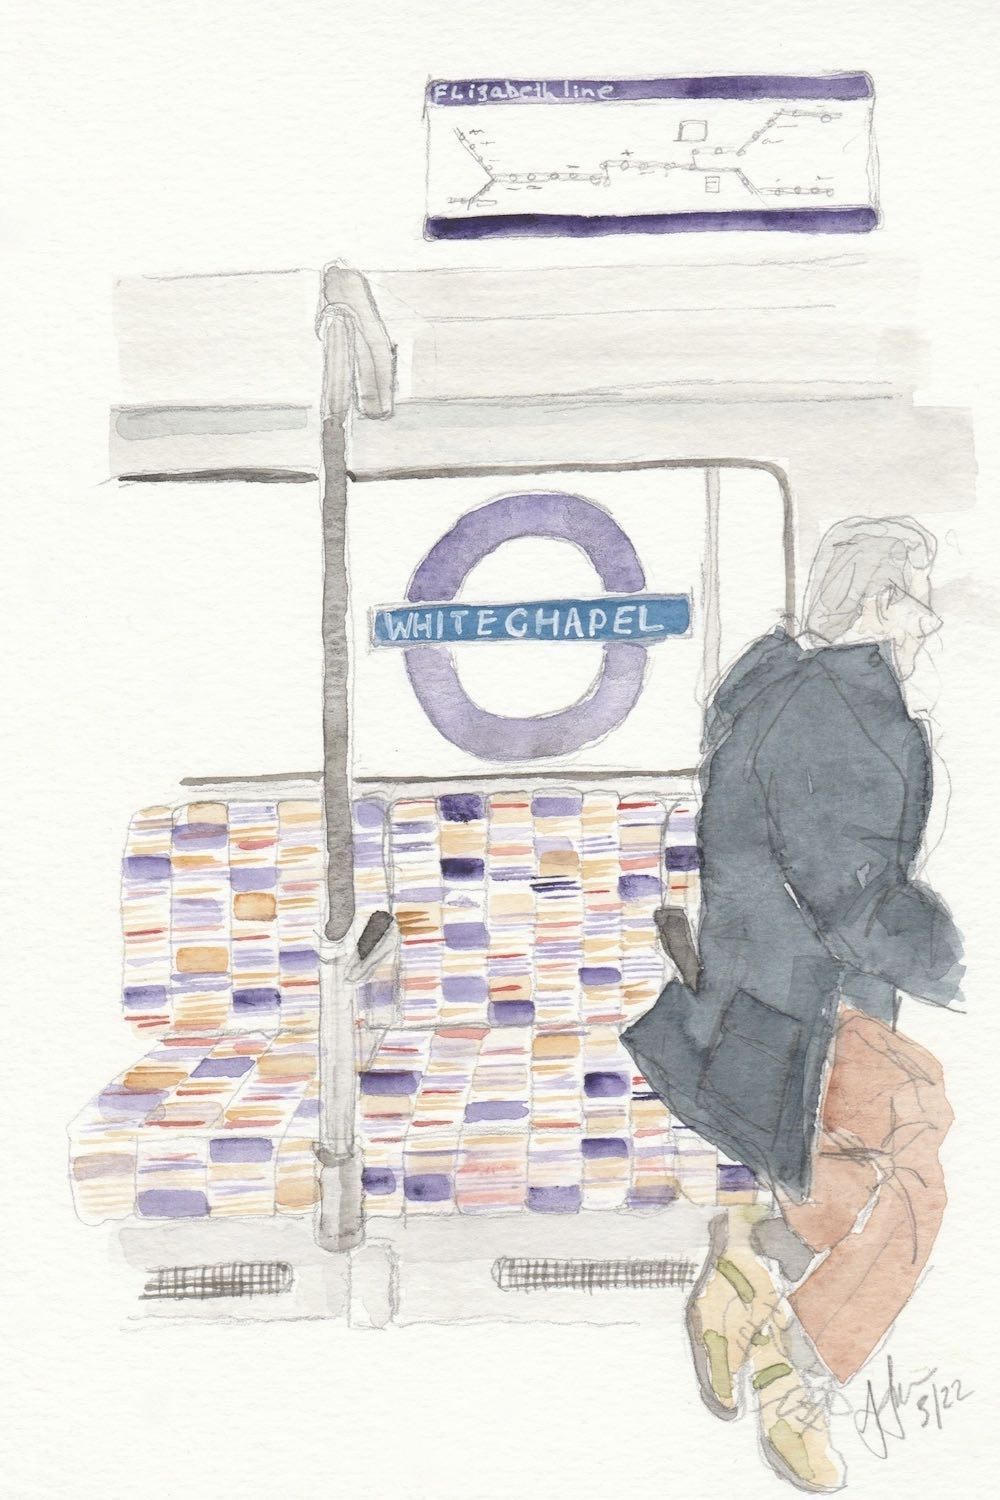 Elizabeth Line Whitechapel Station illustration